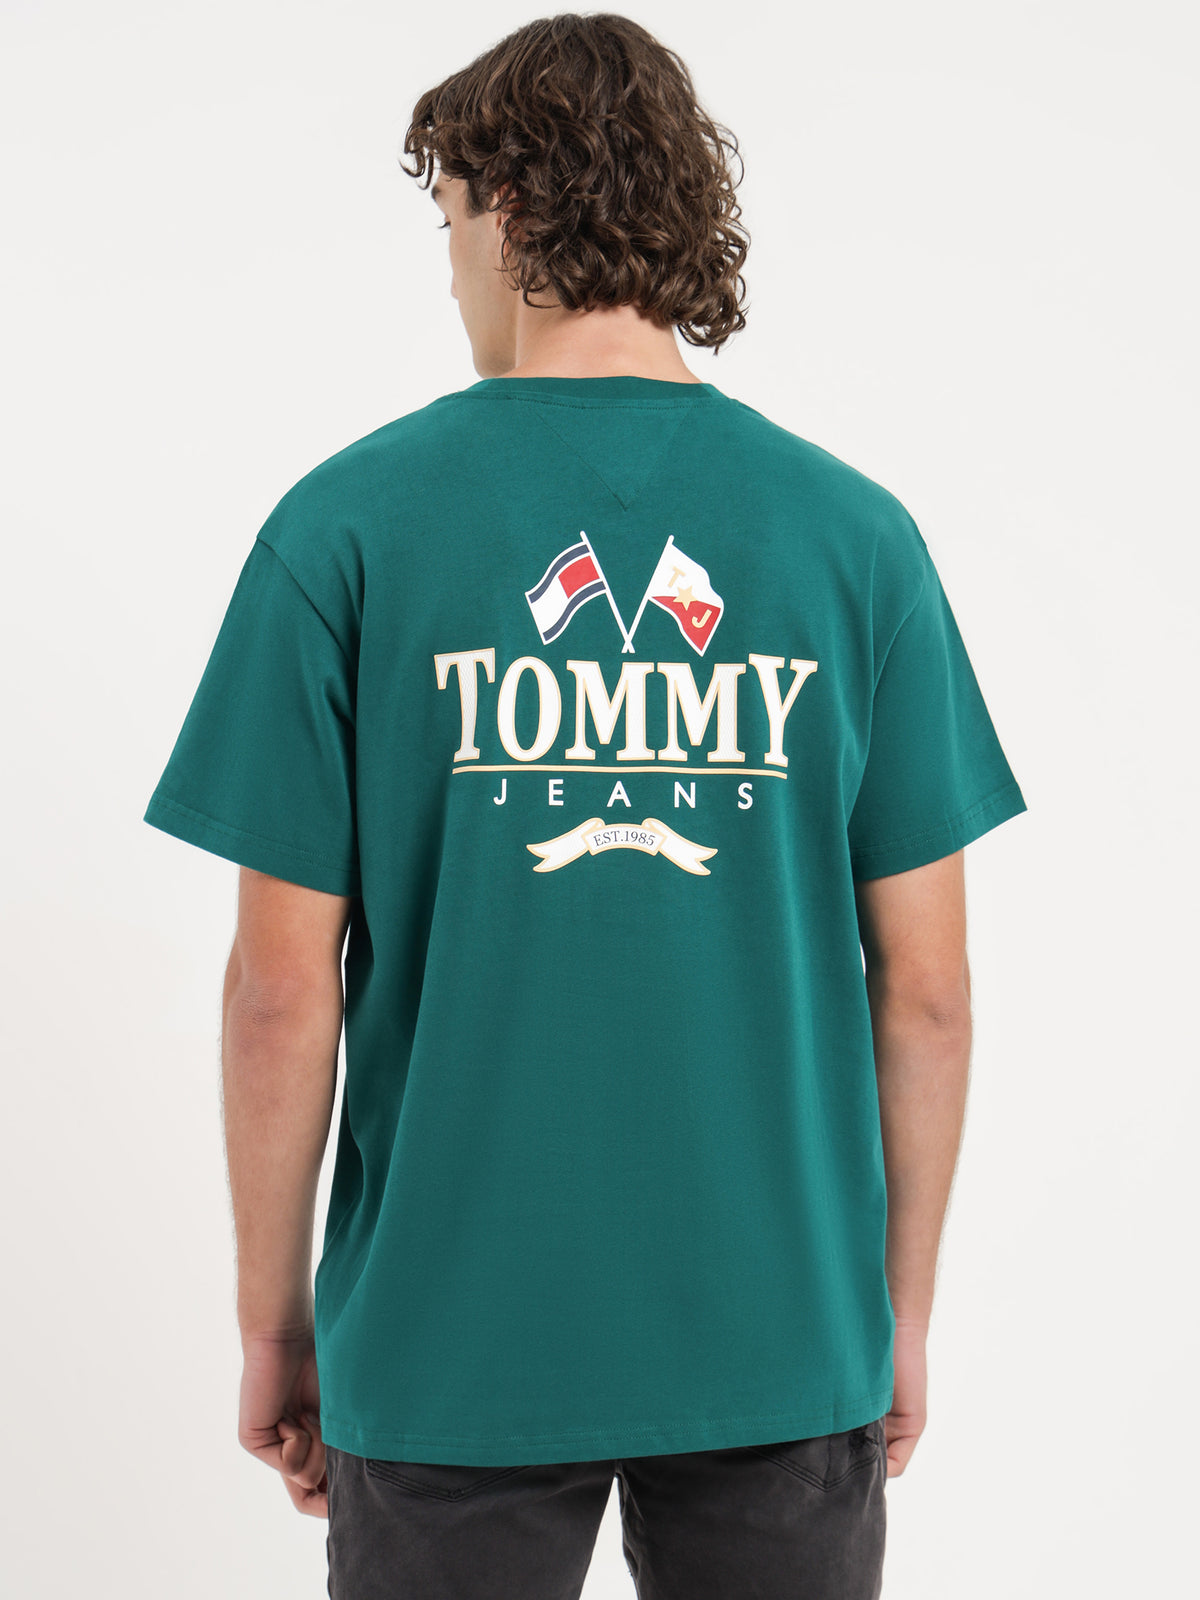 Tommy Hilfiger Modern Relaxed Back Logo T-Shirt in Dark Green | Dark Green